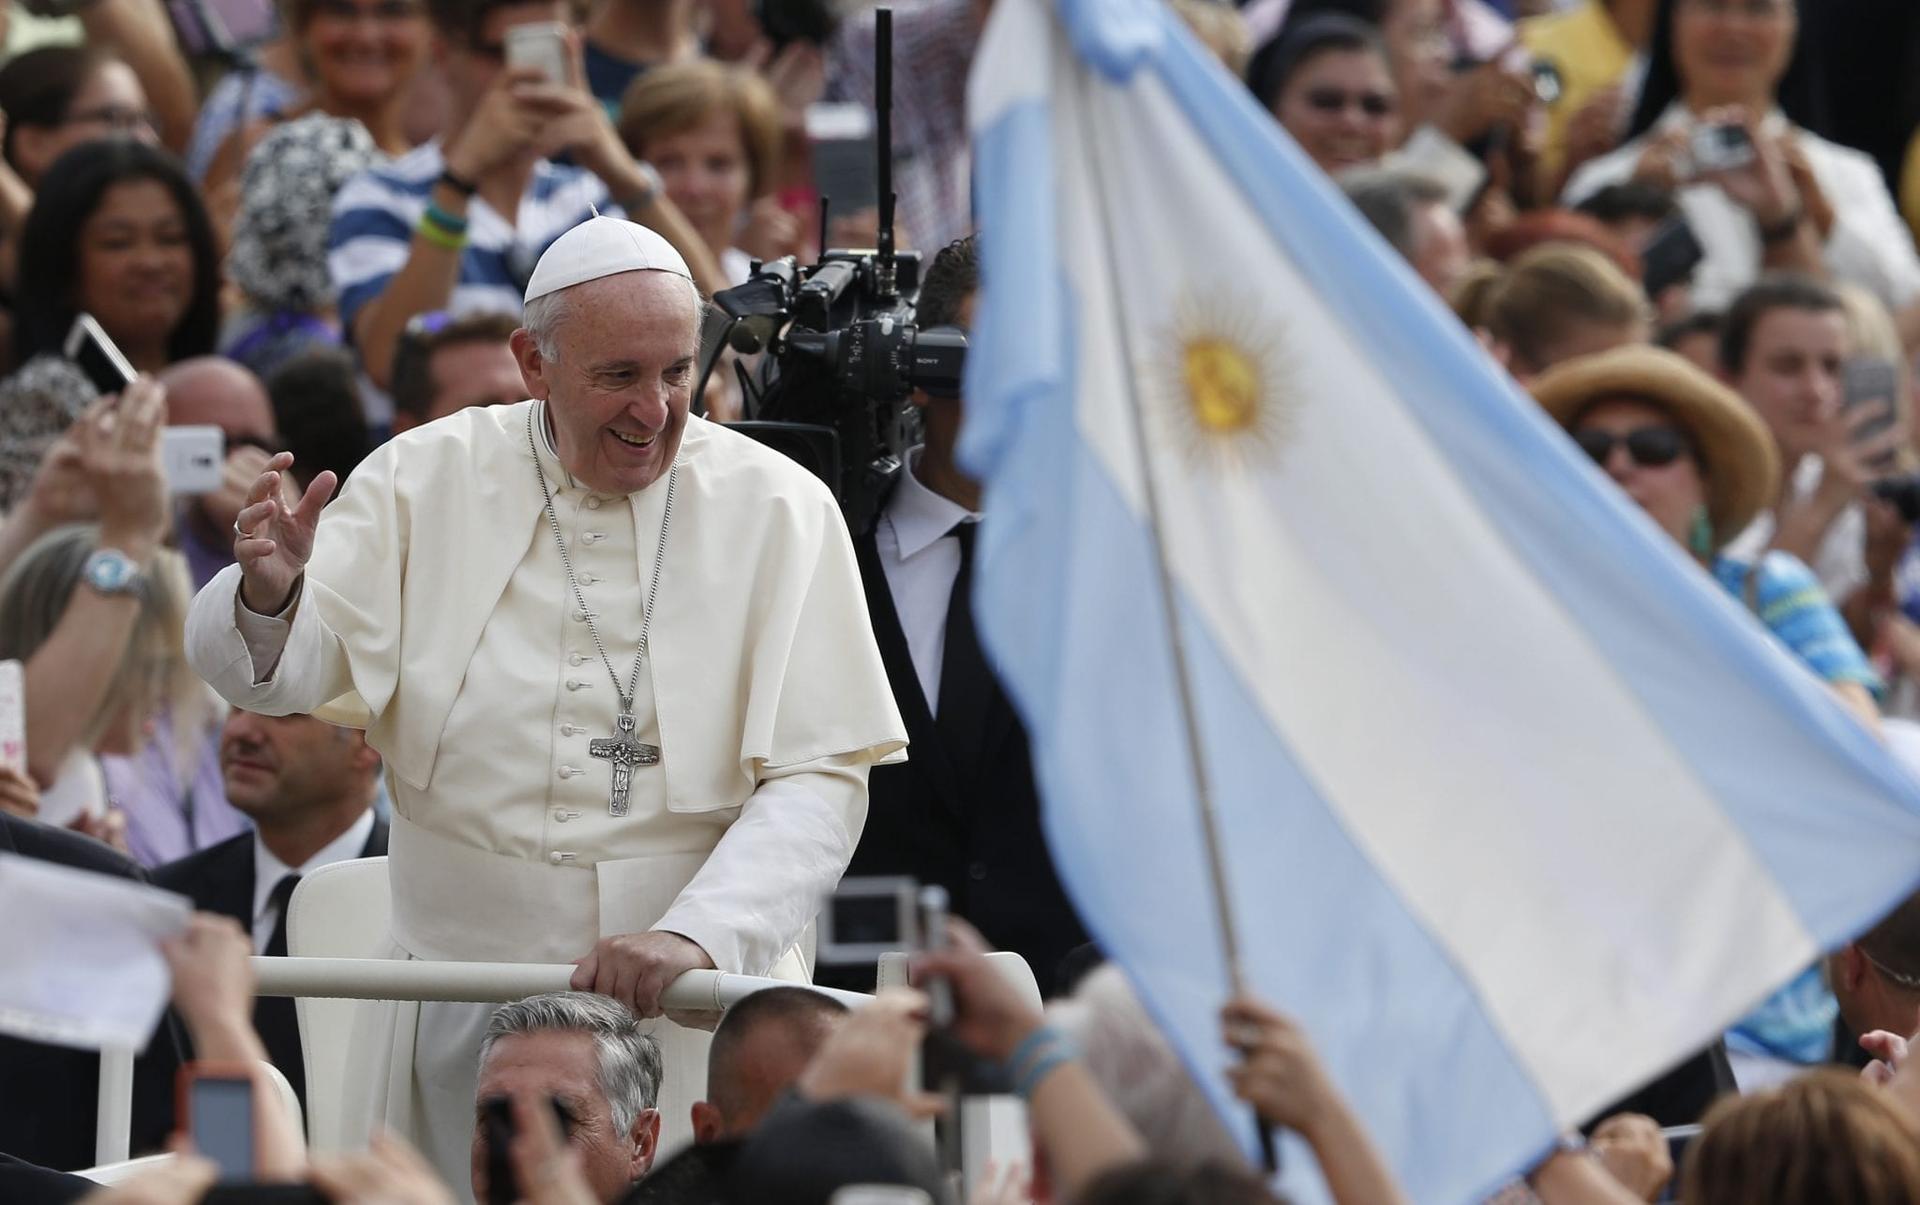 In Argentina’s religious freedom row, politics makes strange bedfellows